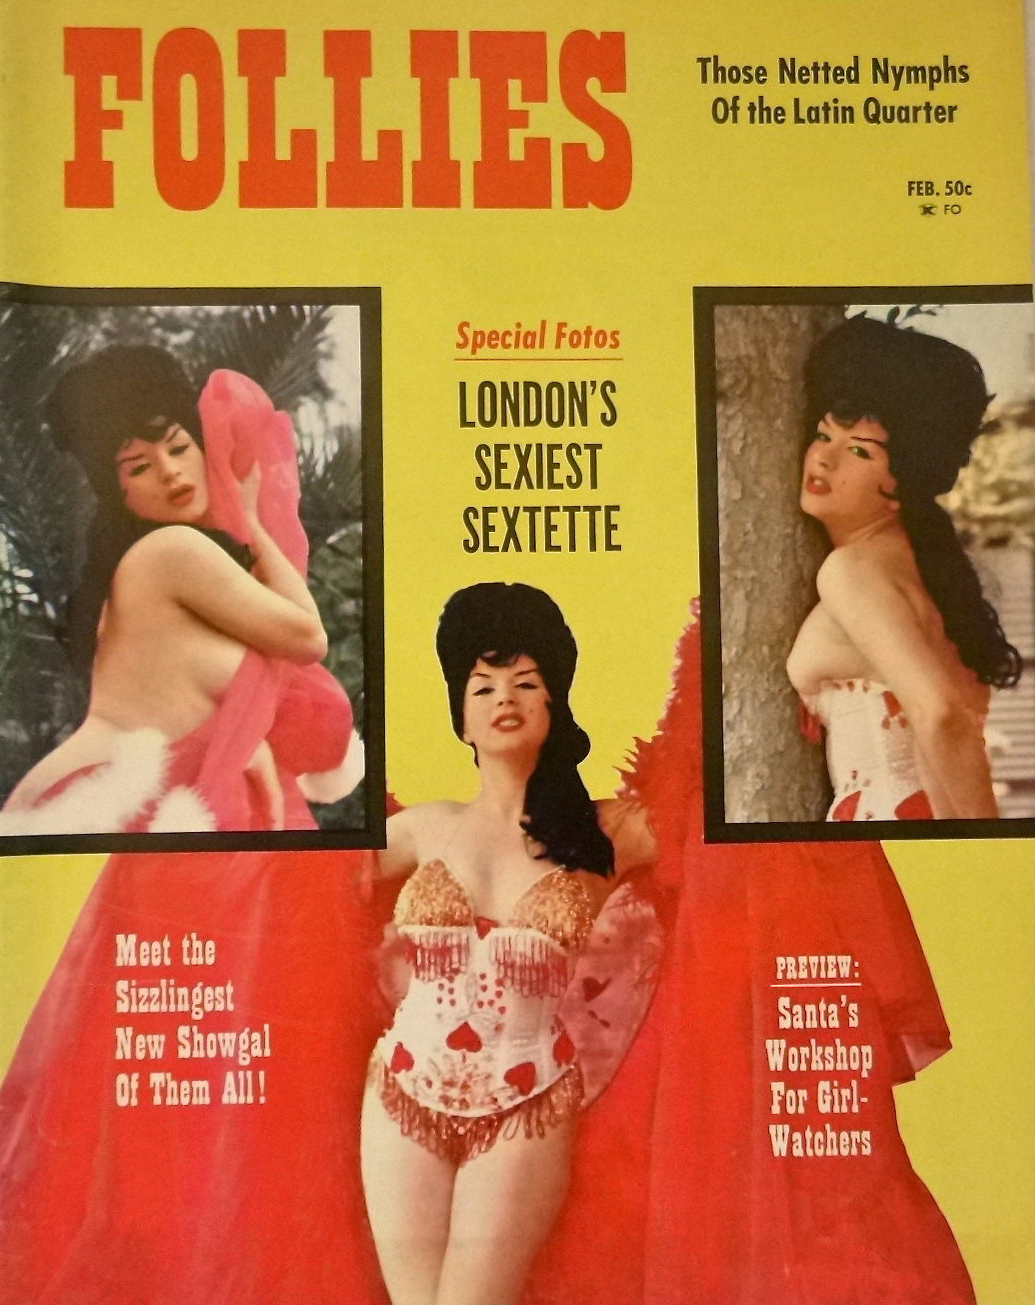 Follies February 1964 magazine back issue Follies magizine back copy Follies February 1964 Vintage Pin-Up Girls Adult Magazine Back Issue Beautiful Ornamental Naked Women. Those Netted Nymphs Of The Latin Quarter.